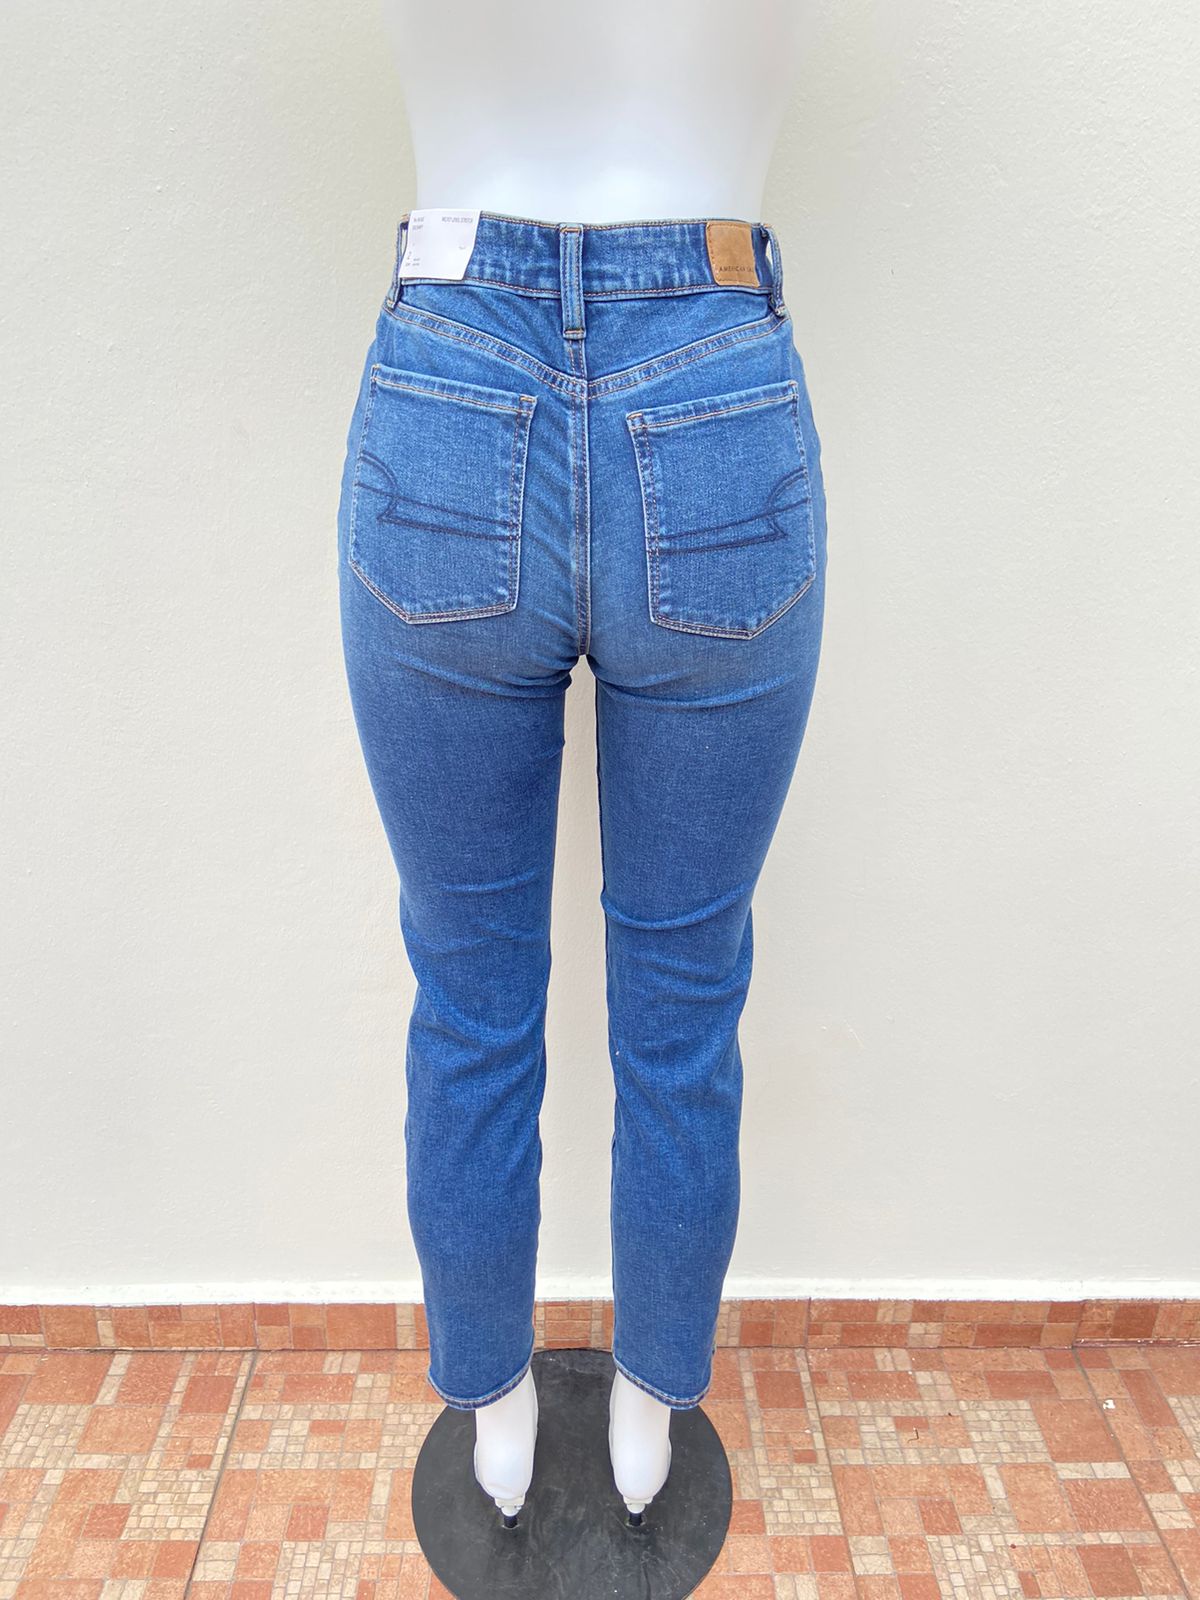 Pantalon jeans American Eagle original azul claro liso NEXT LEVEL STRE